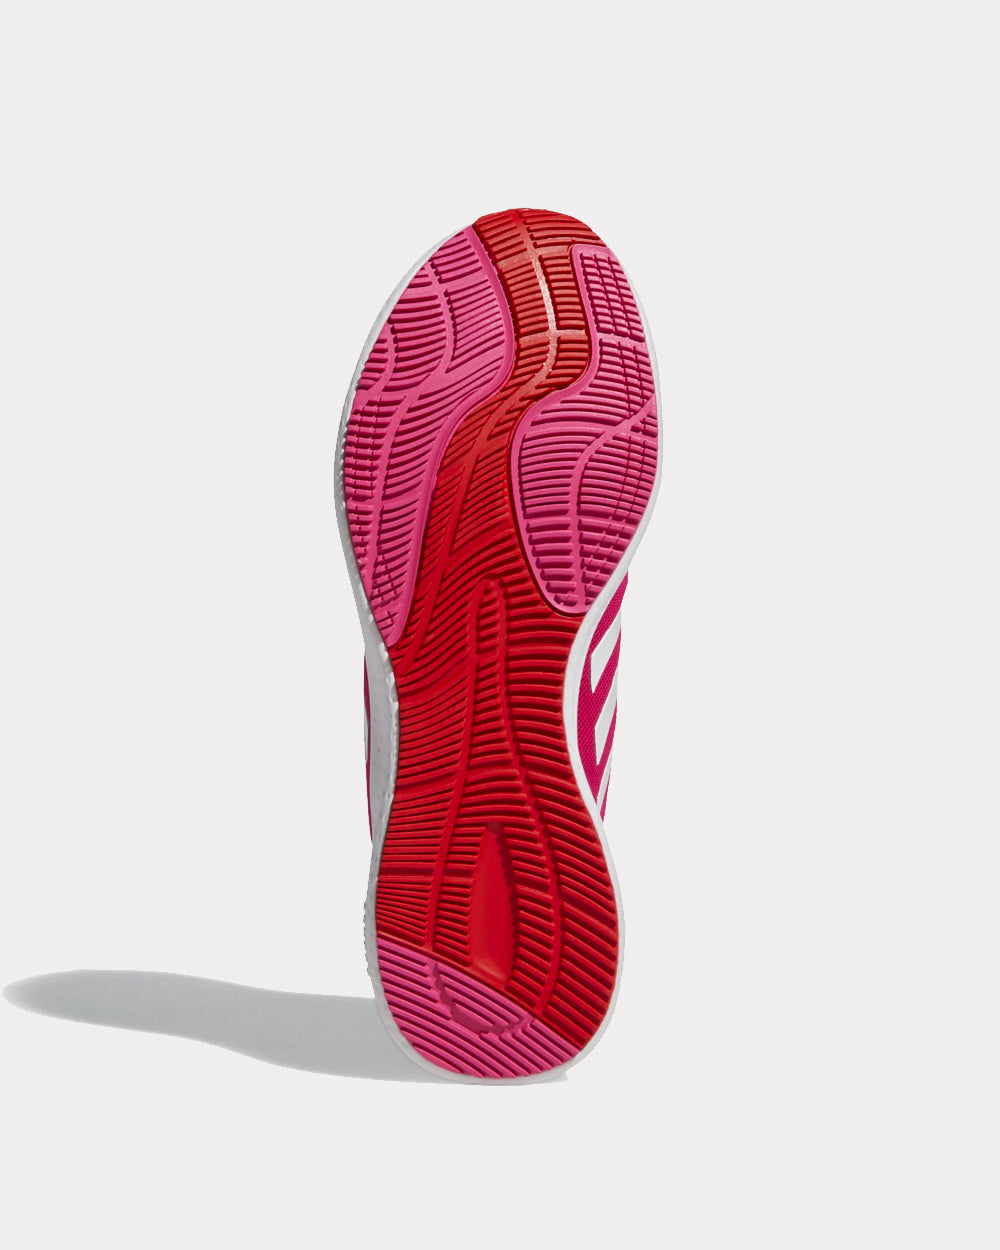 Adidas x Marimekko - Edge Lux 4 Team Real Magenta / Cloud White / Vivid Red Running Shoes